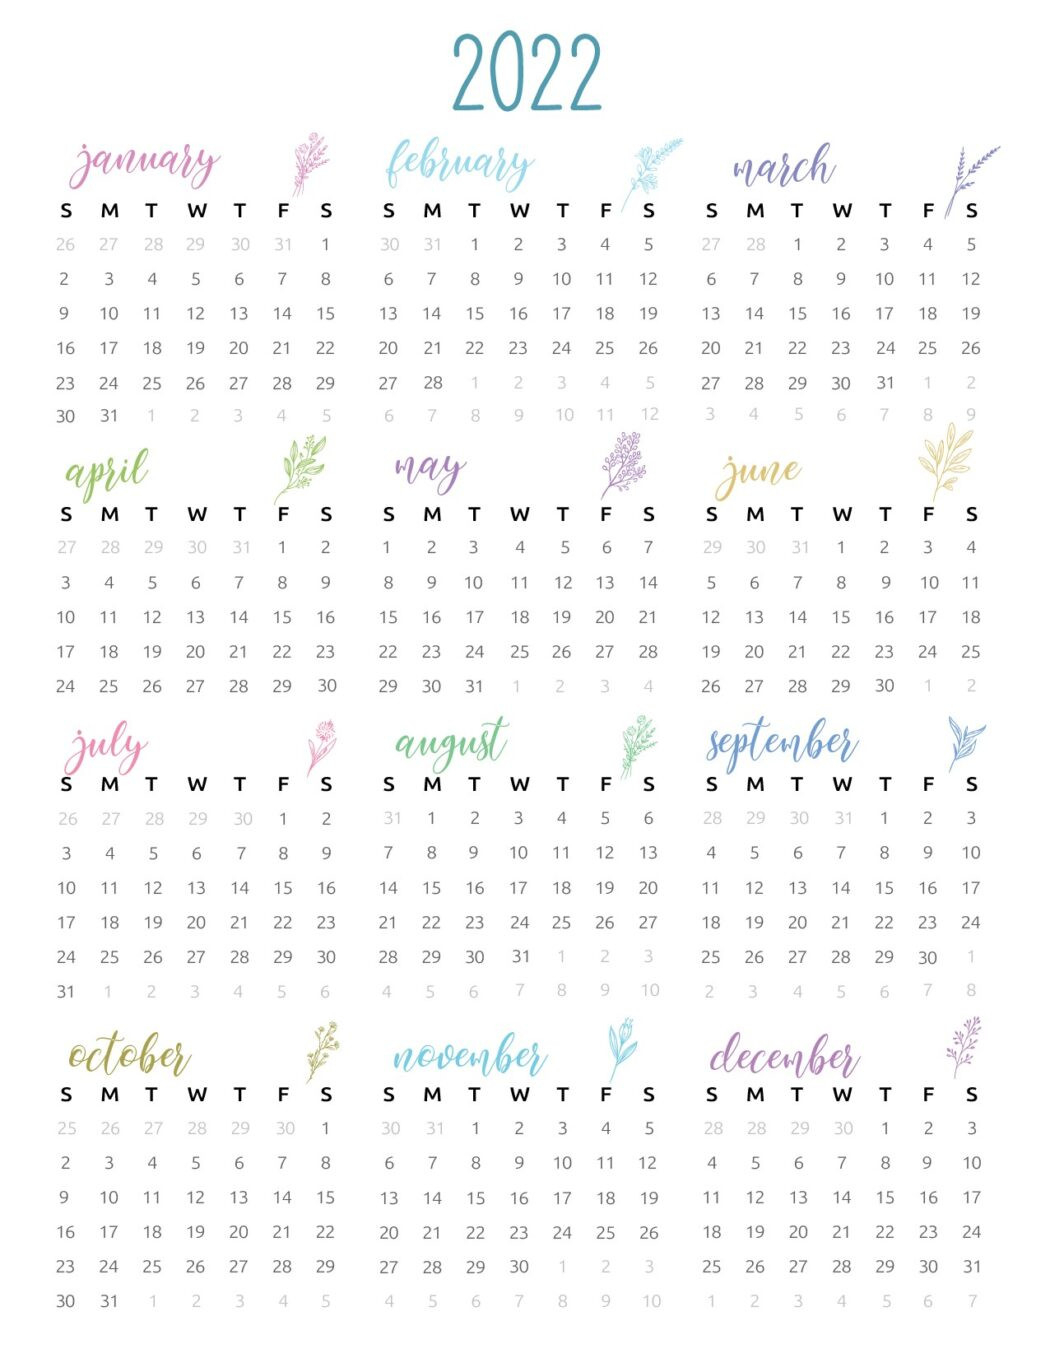 2022 Yearly Calendar Printable - World Of Printables  Printable 2 Year Calendar 2022 And 2022